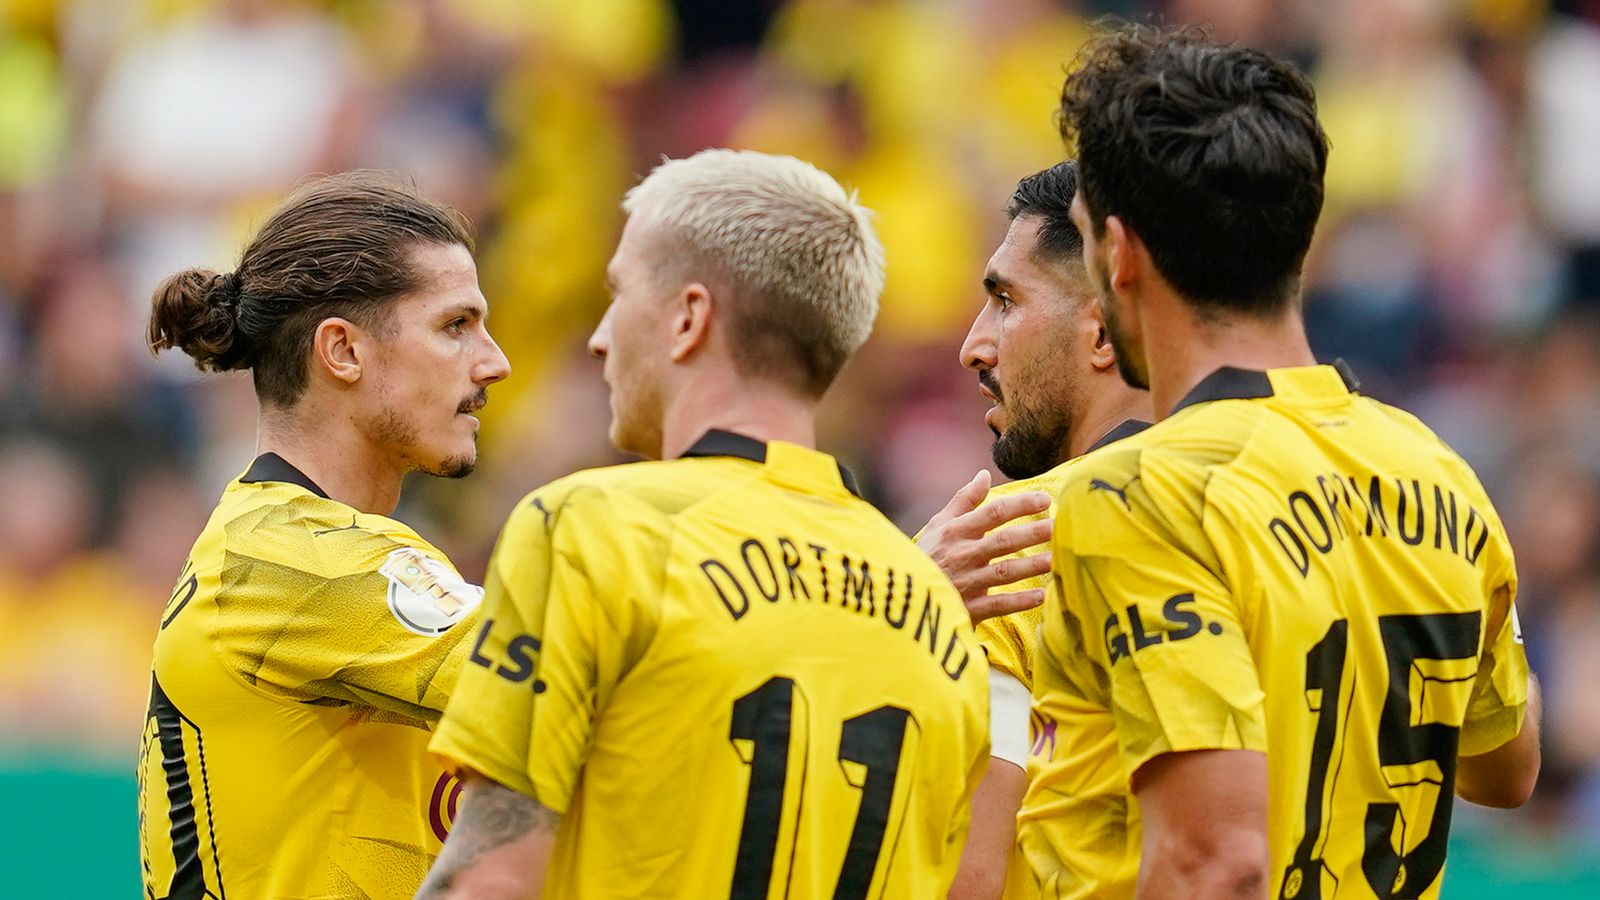 Borussia Dortmund must go again in Bundesliga title race, says Roman Weidenfeller, but can BVB do it? | Football News | Sky Sports